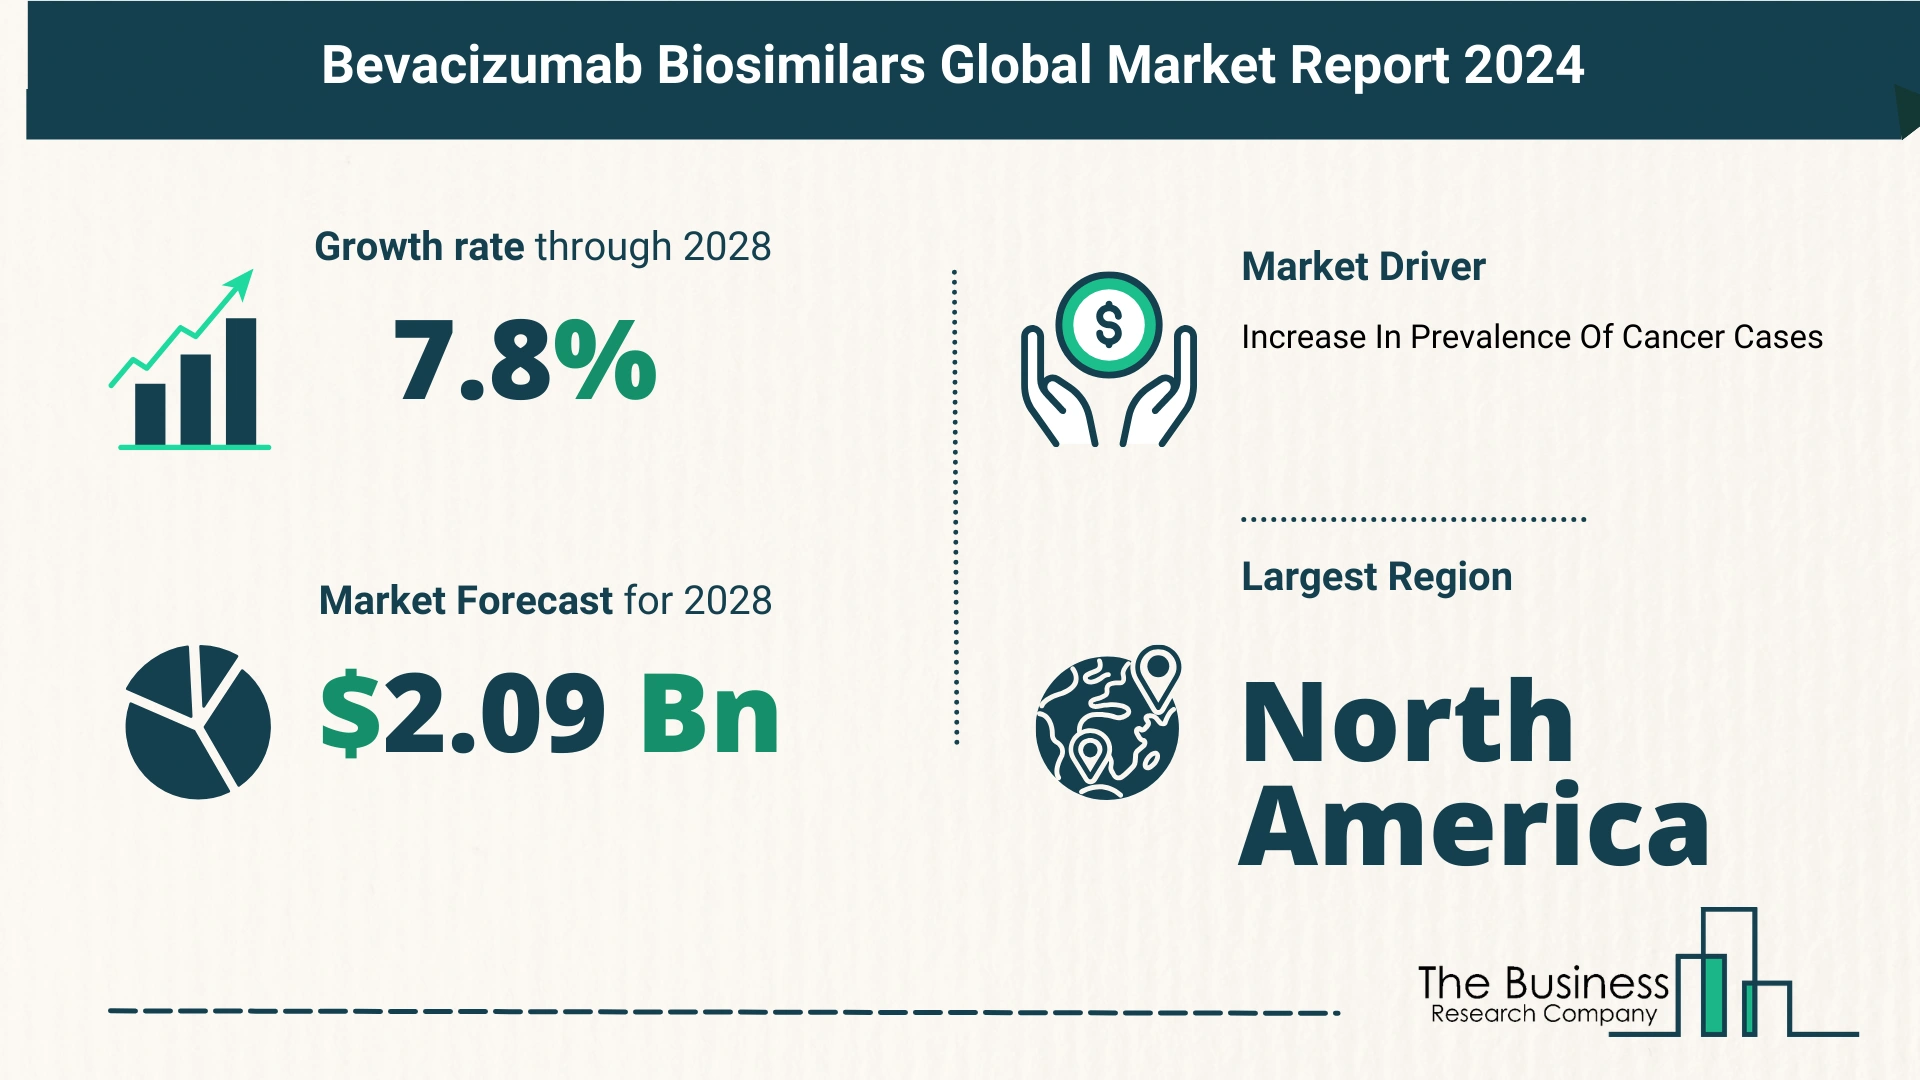 Global Bevacizumab Biosimilars Market